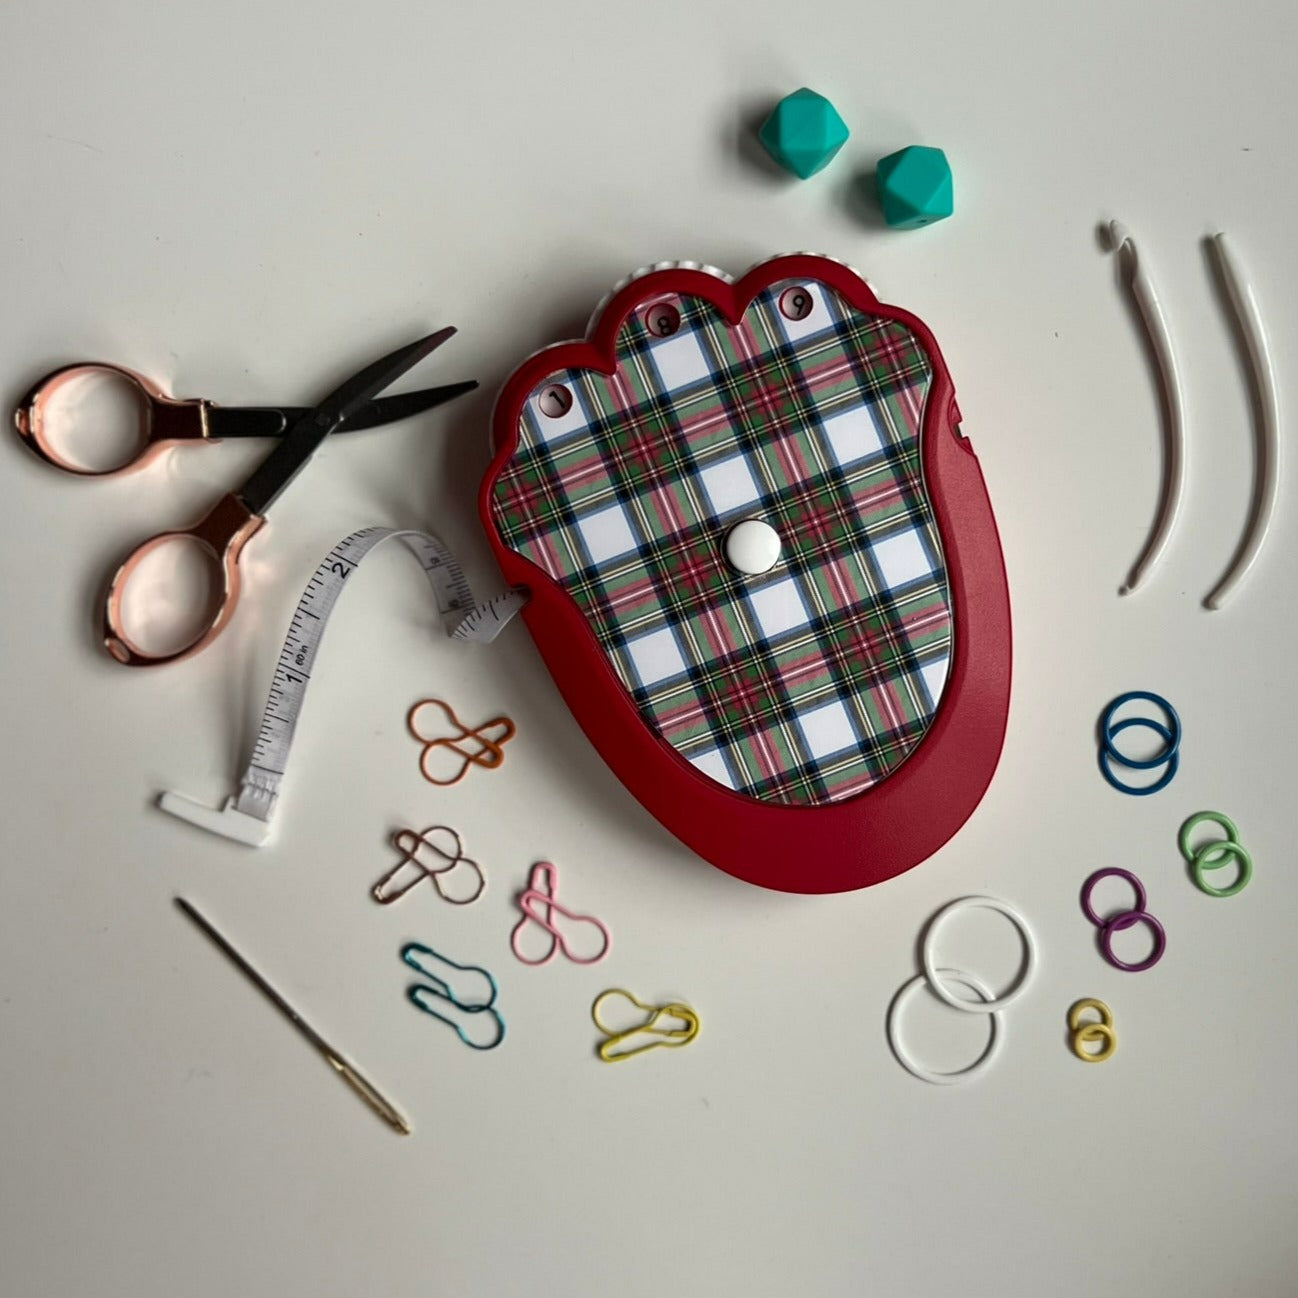 Crochet Knitting Kits, Handmade Knitting Kit, Diy Kit Knitting